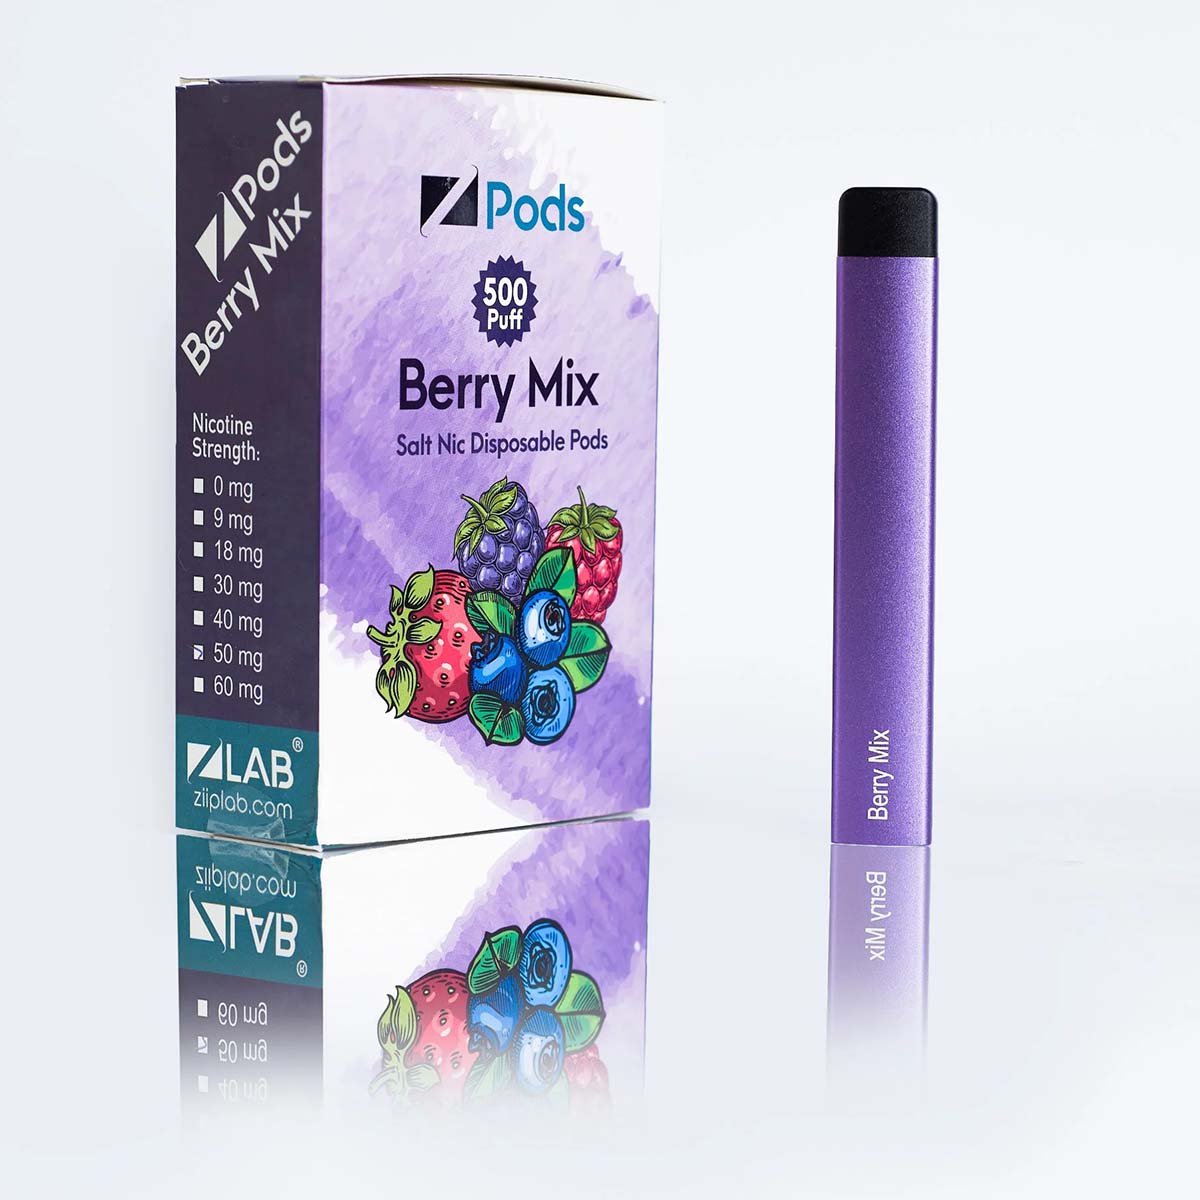 Ziip Stick's Z Stick Disposable Vape in Berry Mix flavor beside its box packaging